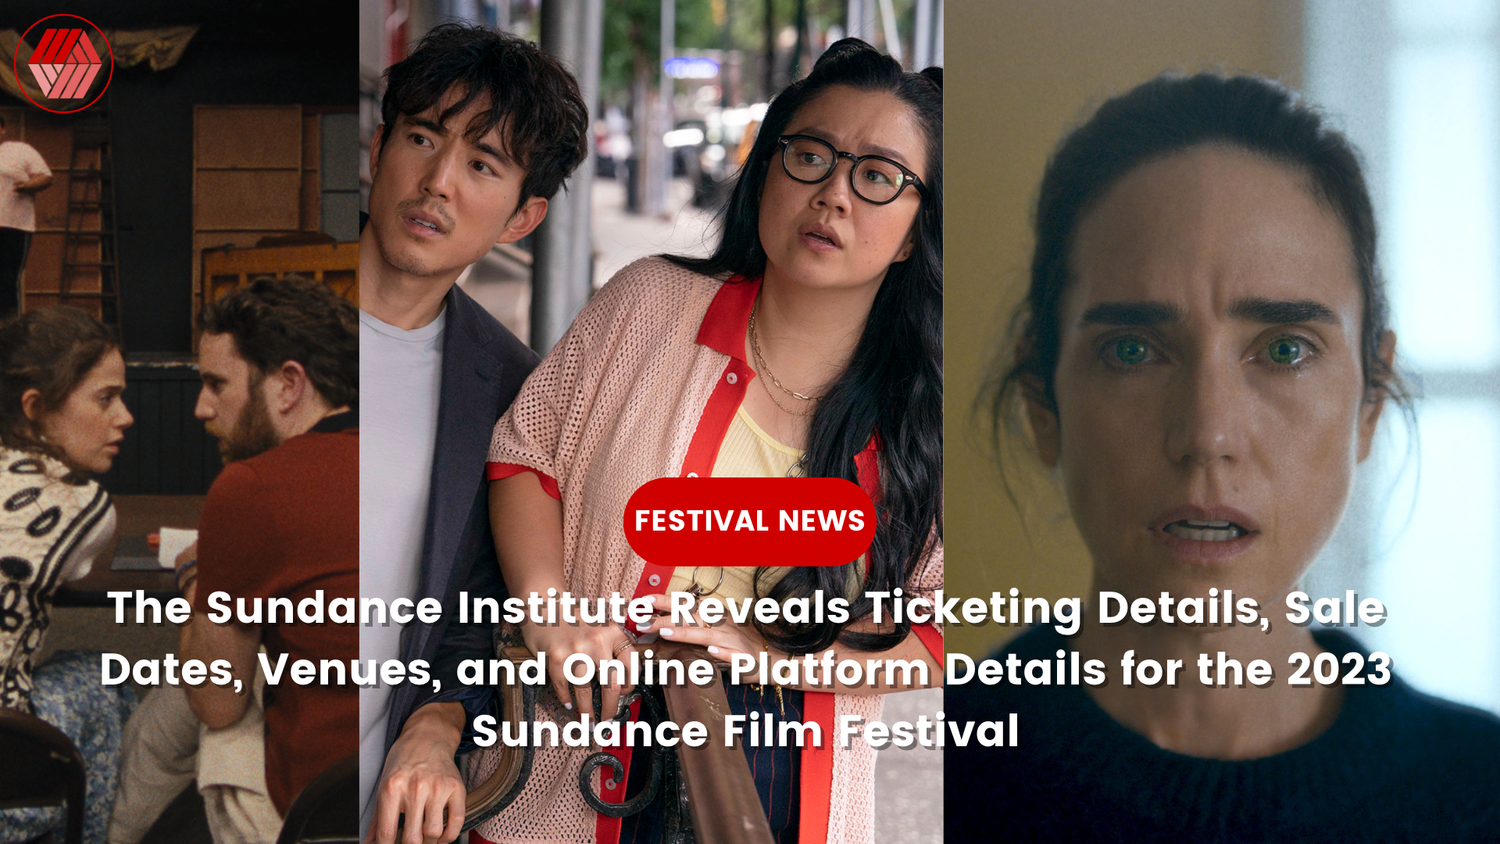 Sofia Coppola and Andrew Durham attend the 2023 Sundance Film